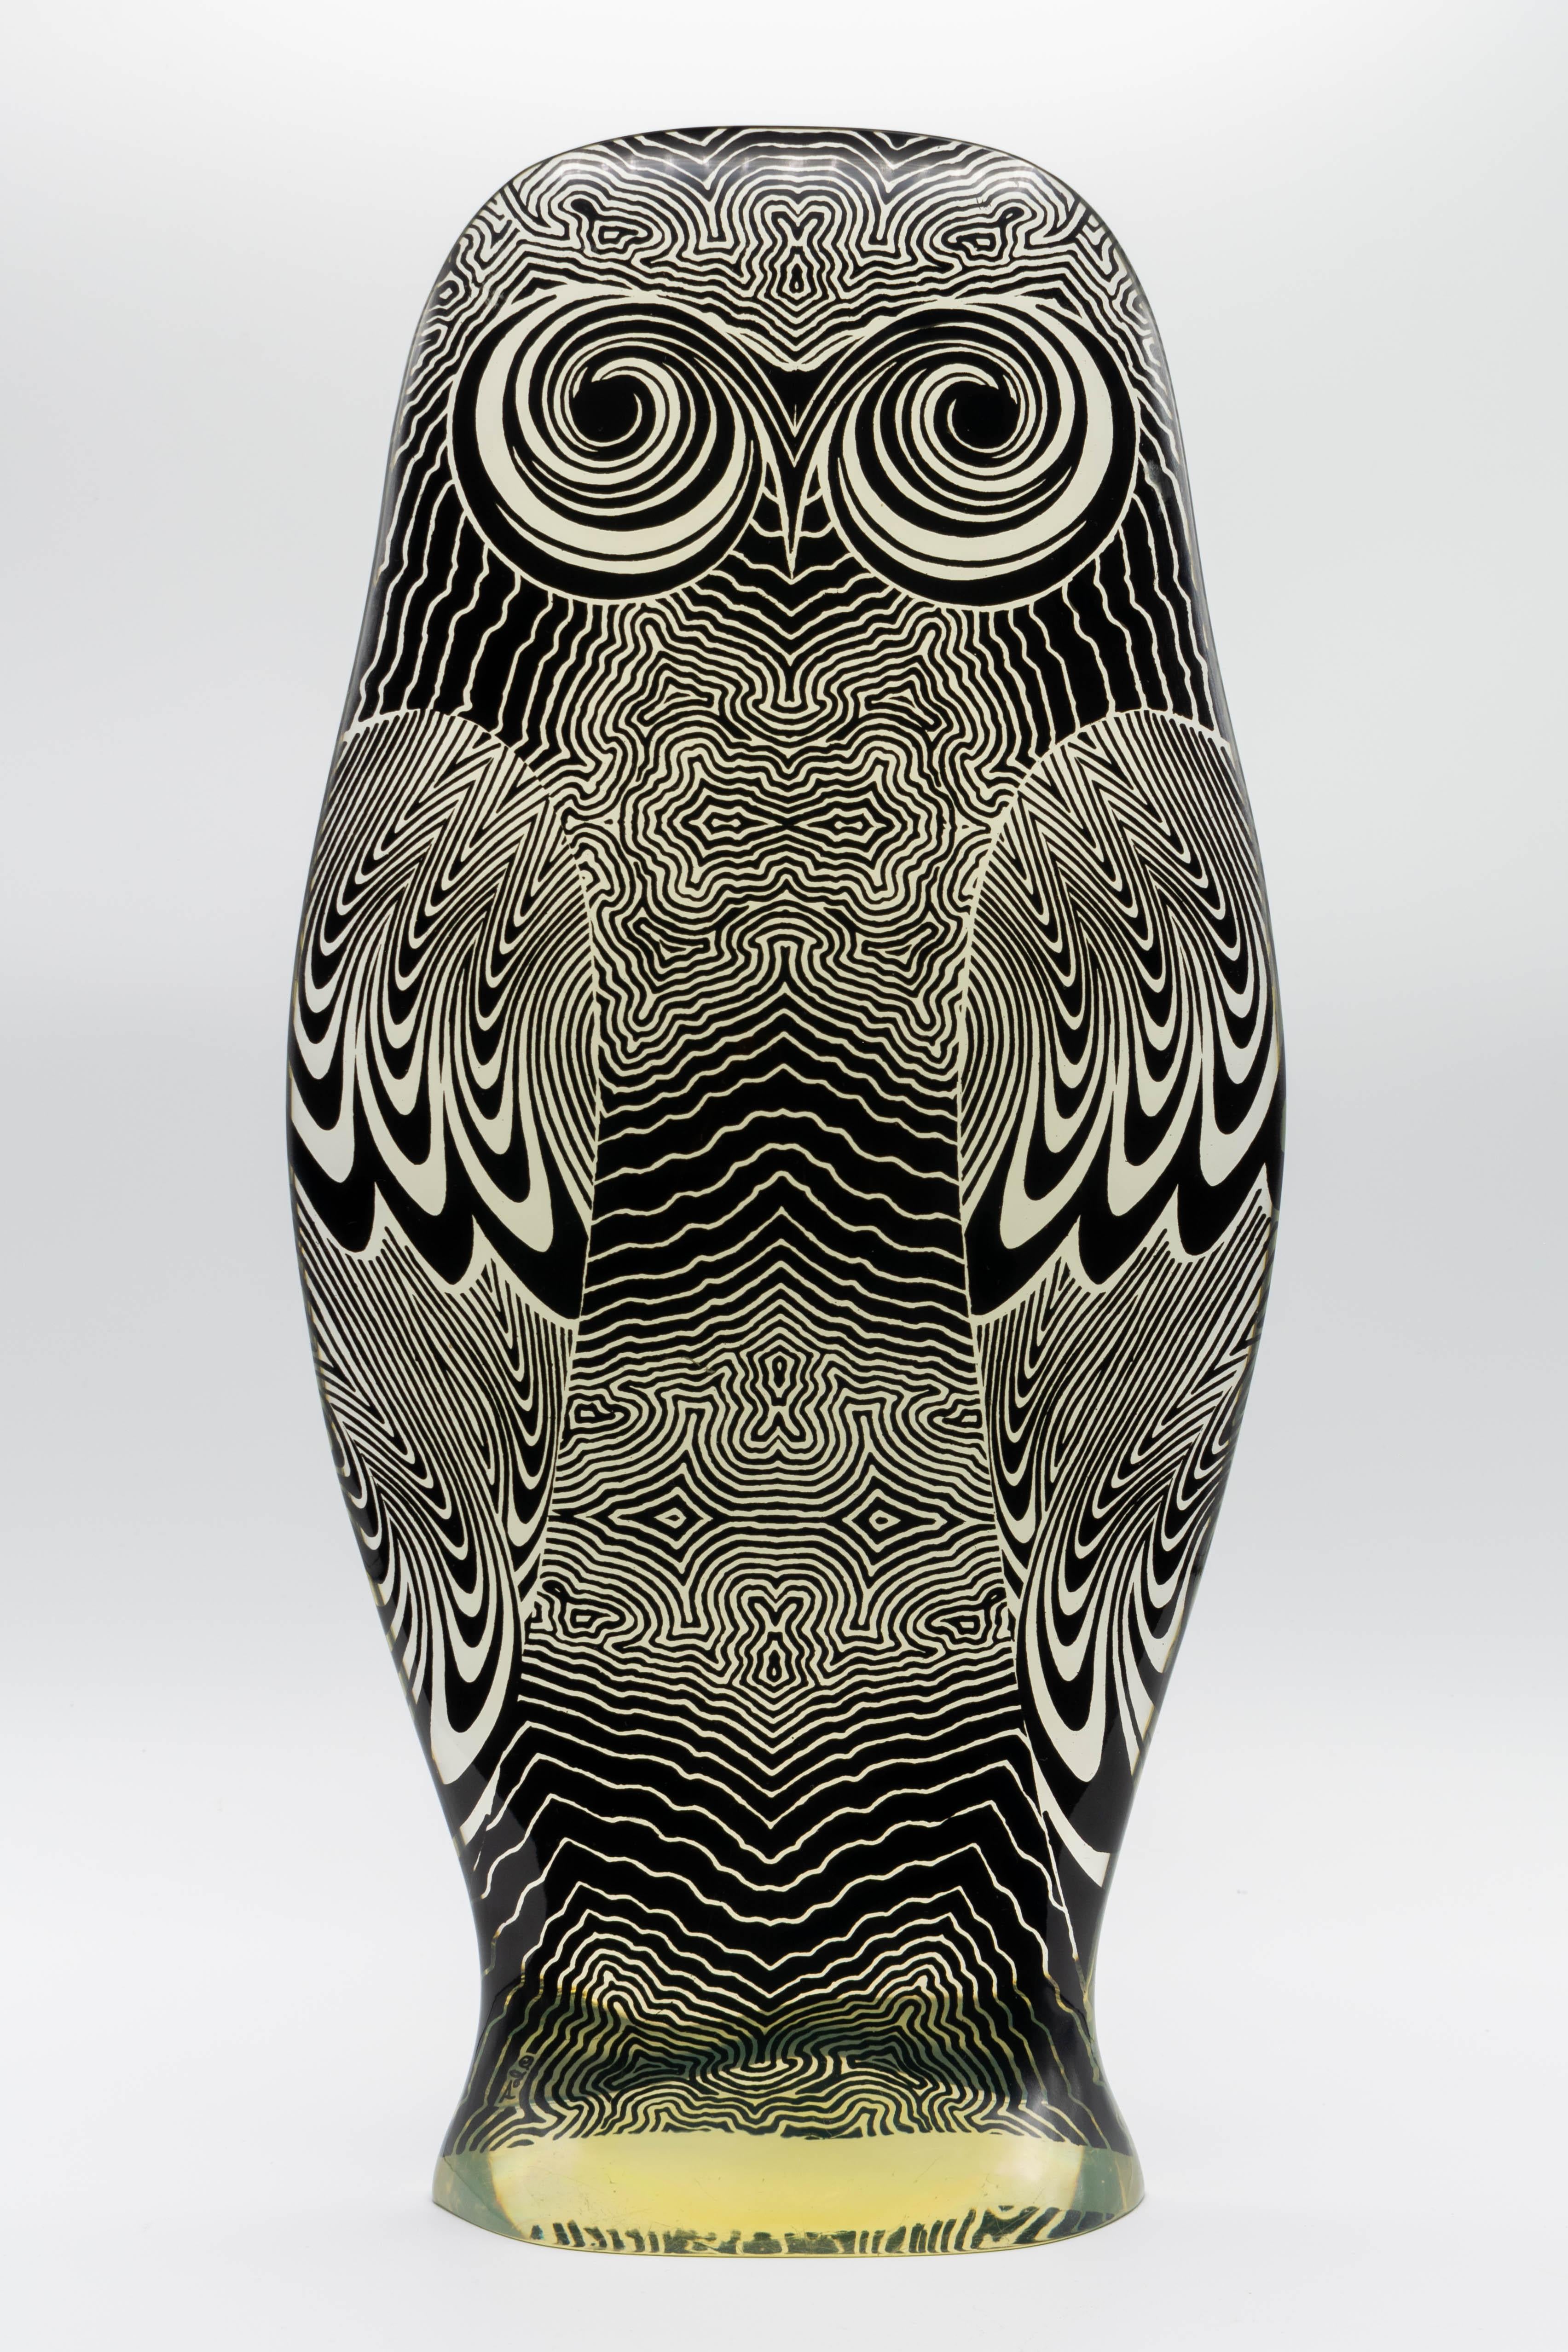 A rare large scale Mid-Century Modern Lucite Op Art owl designed by Abraham Palatnik. 31.25